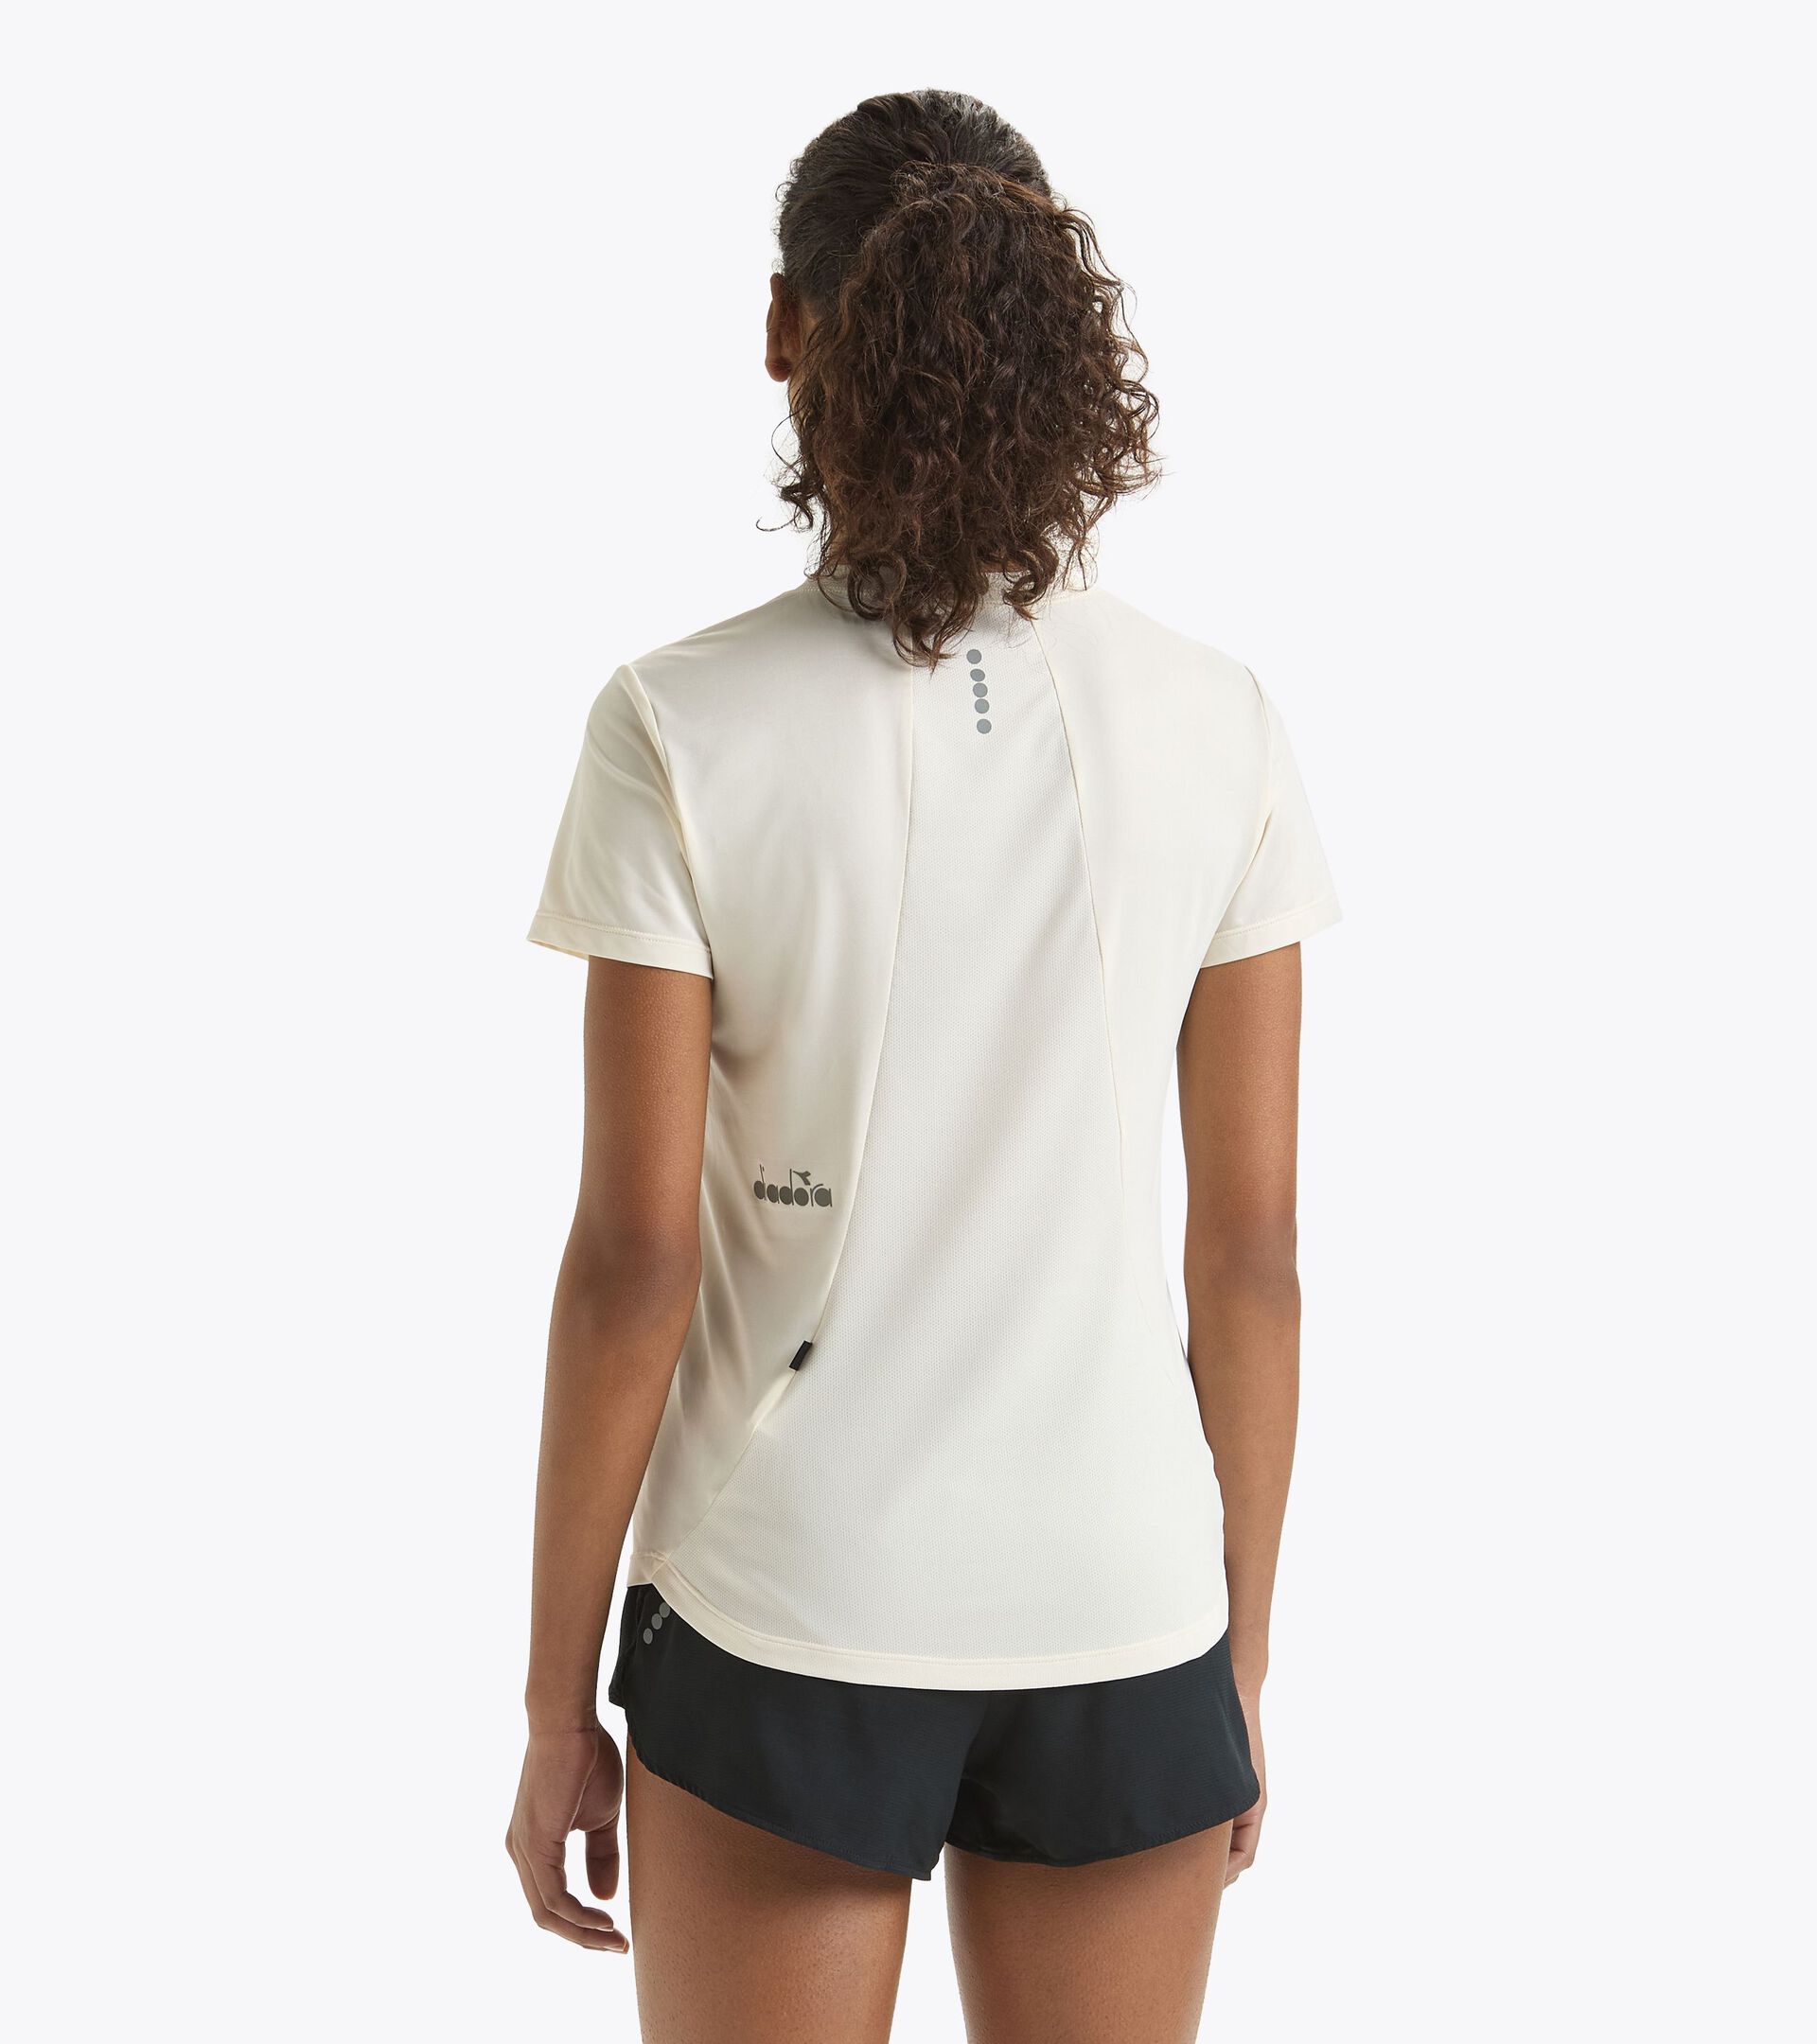 Camiseta de running - Tejido ligero - Mujer
 L. SUPER LIGHT SS T-SHIRT BLANCO MURMURAR - Diadora